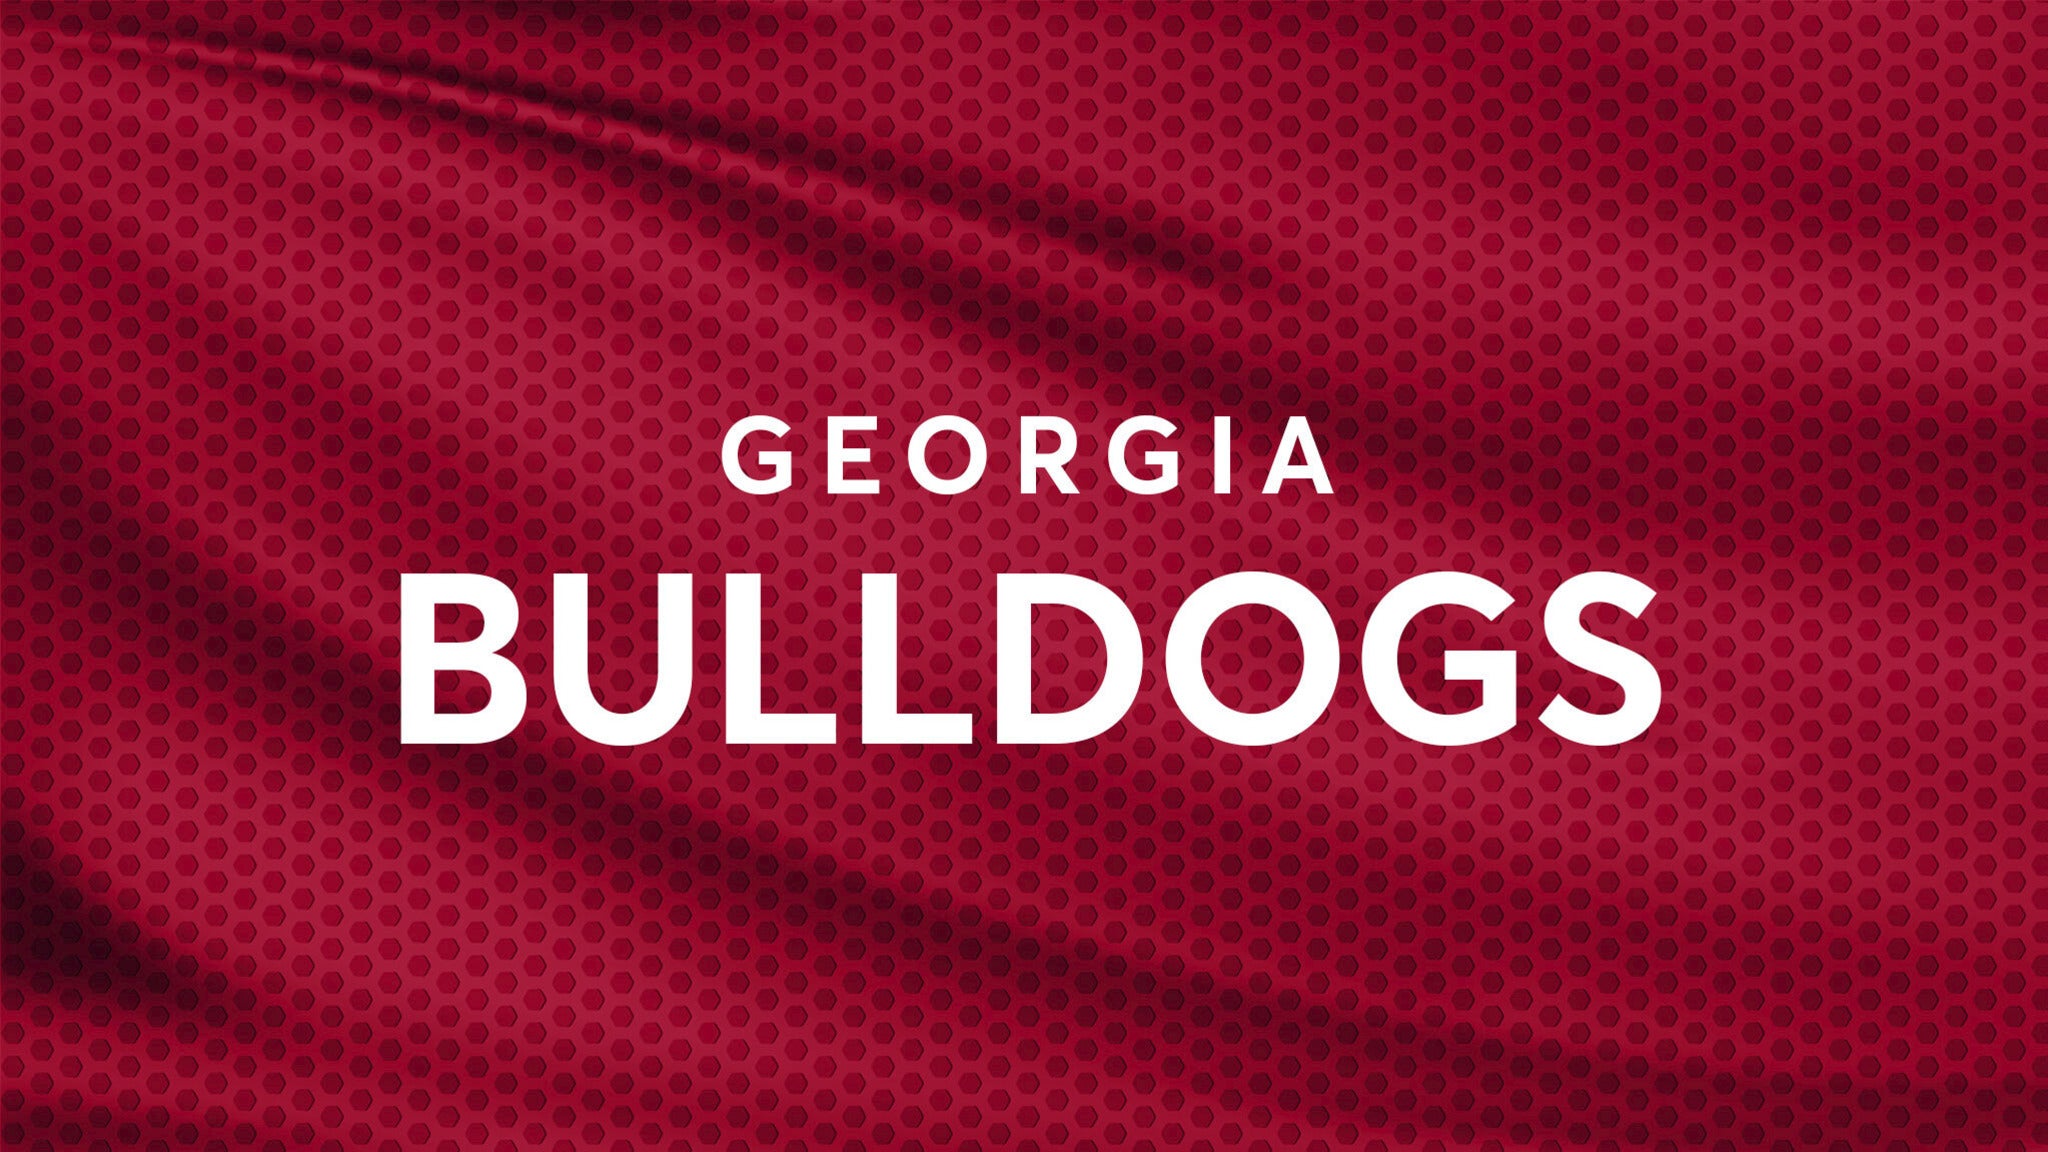 Georgia Bulldogs Softball presale information on freepresalepasswords.com